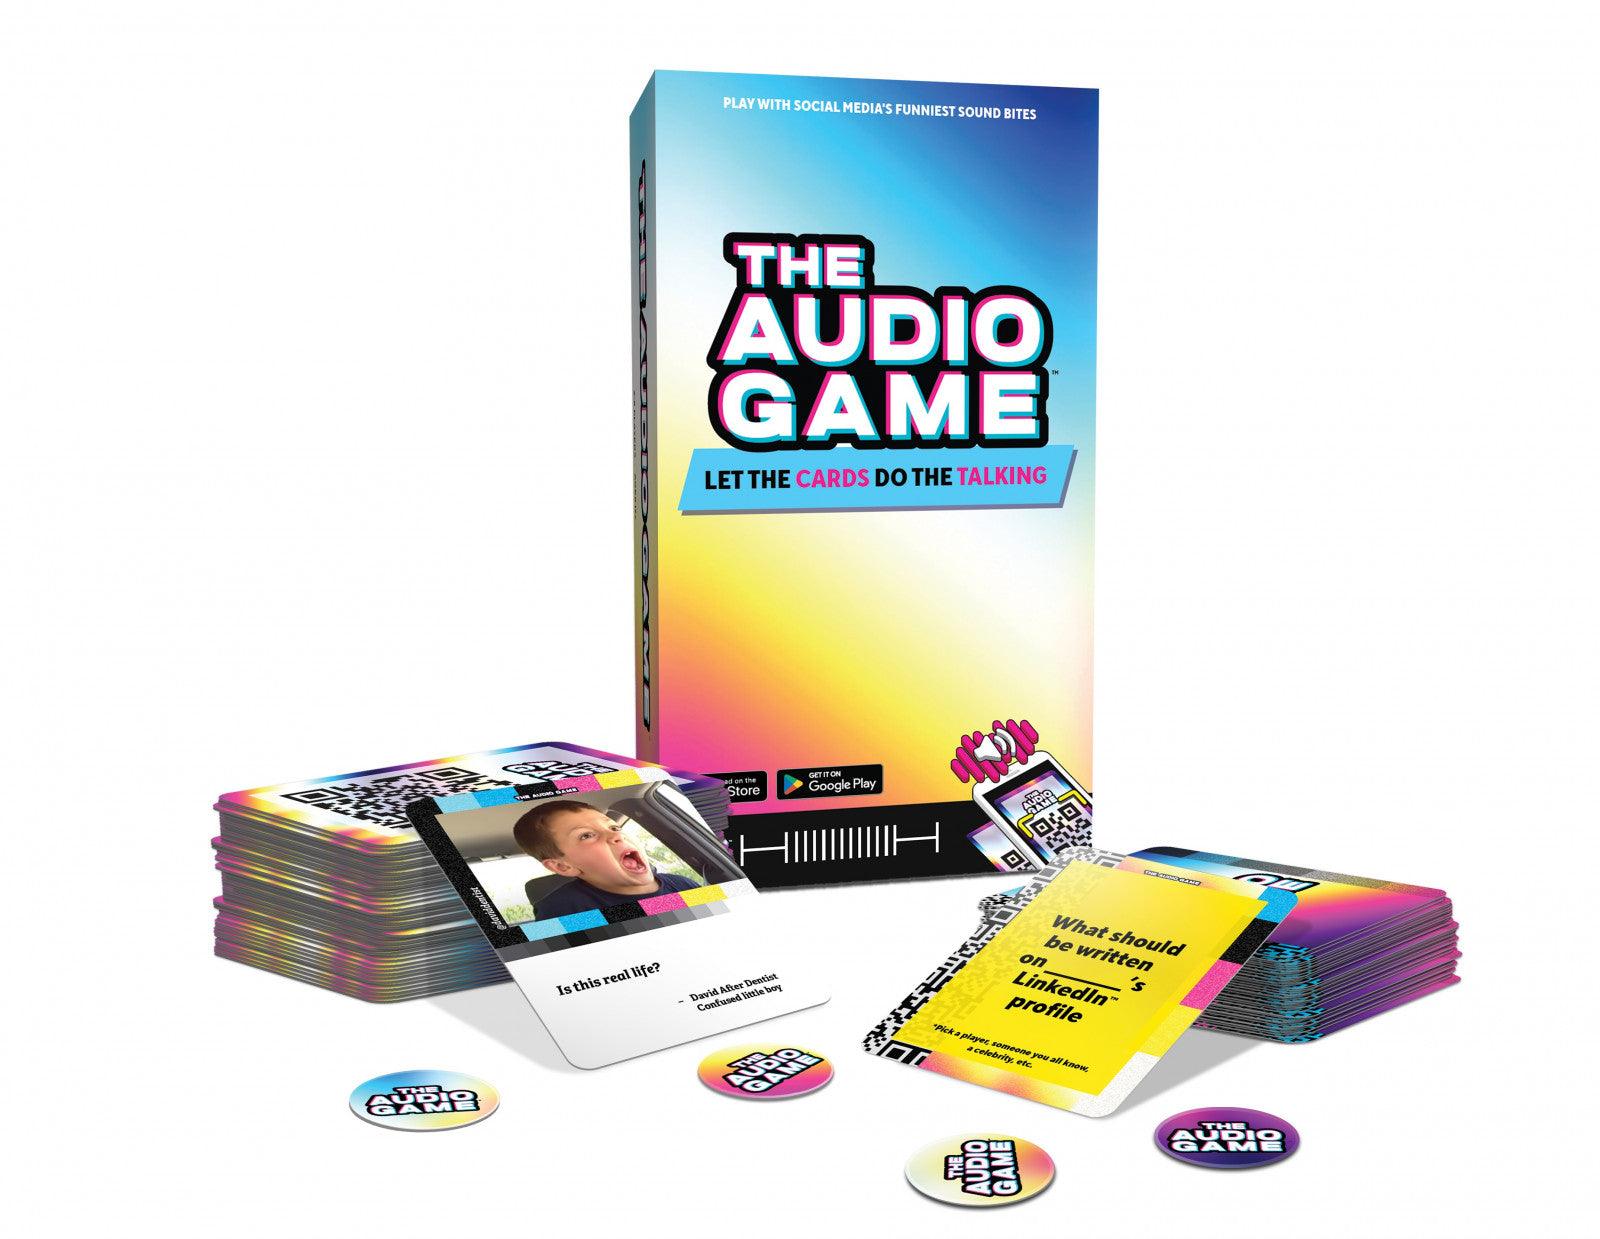 VR-103712 The Audio Game - Wilder Games - Titan Pop Culture